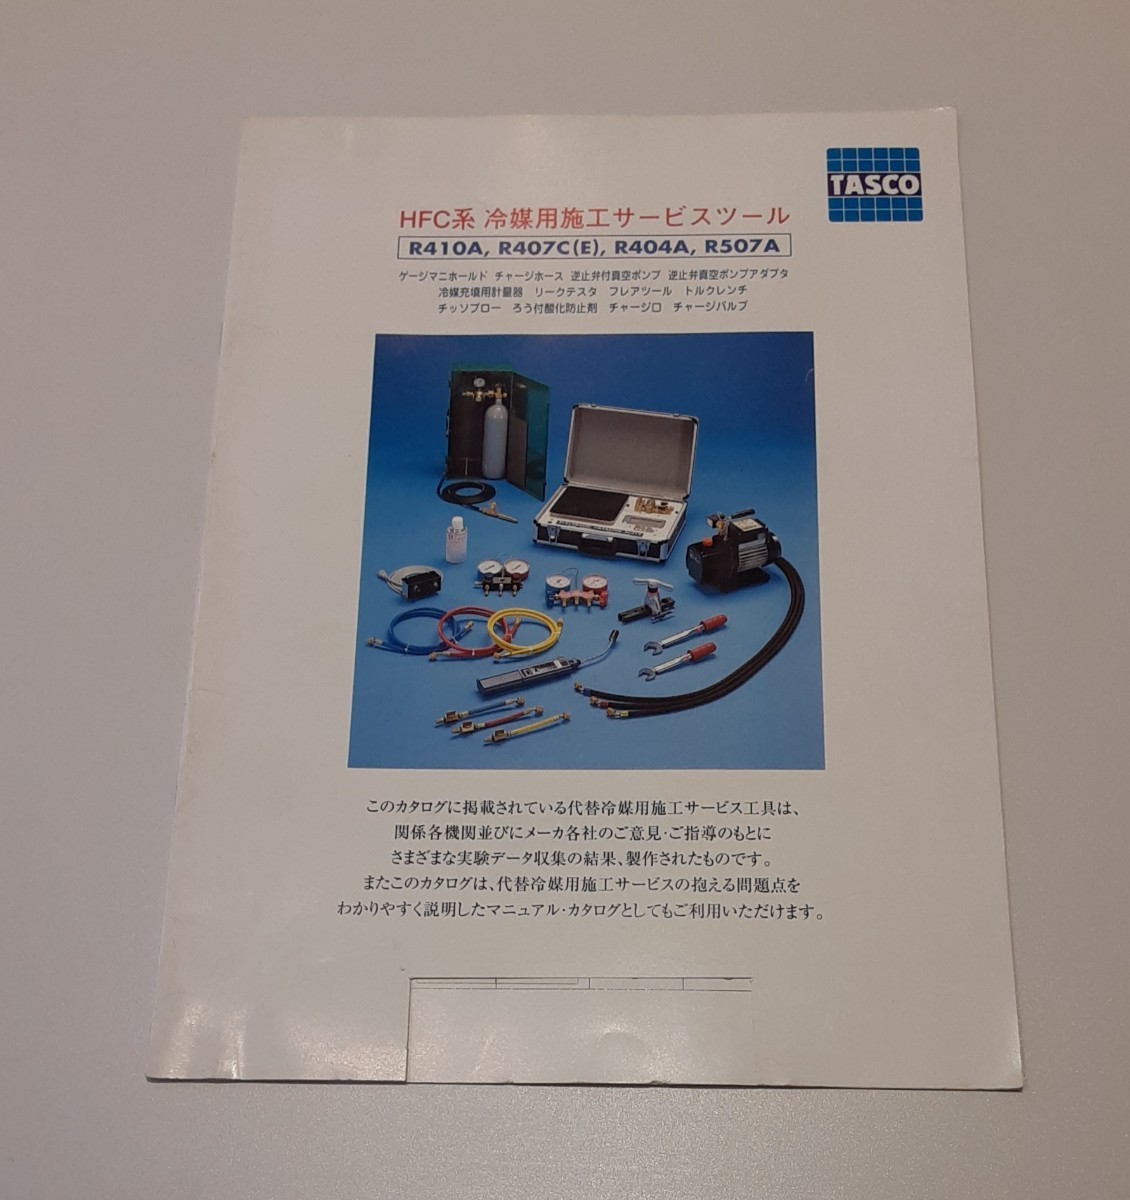 TASCO HFC系 冷媒用施工サービスツール カタログ 1997年 10月 レトロ 雑貨 コレクション 資料 タスコ_画像1